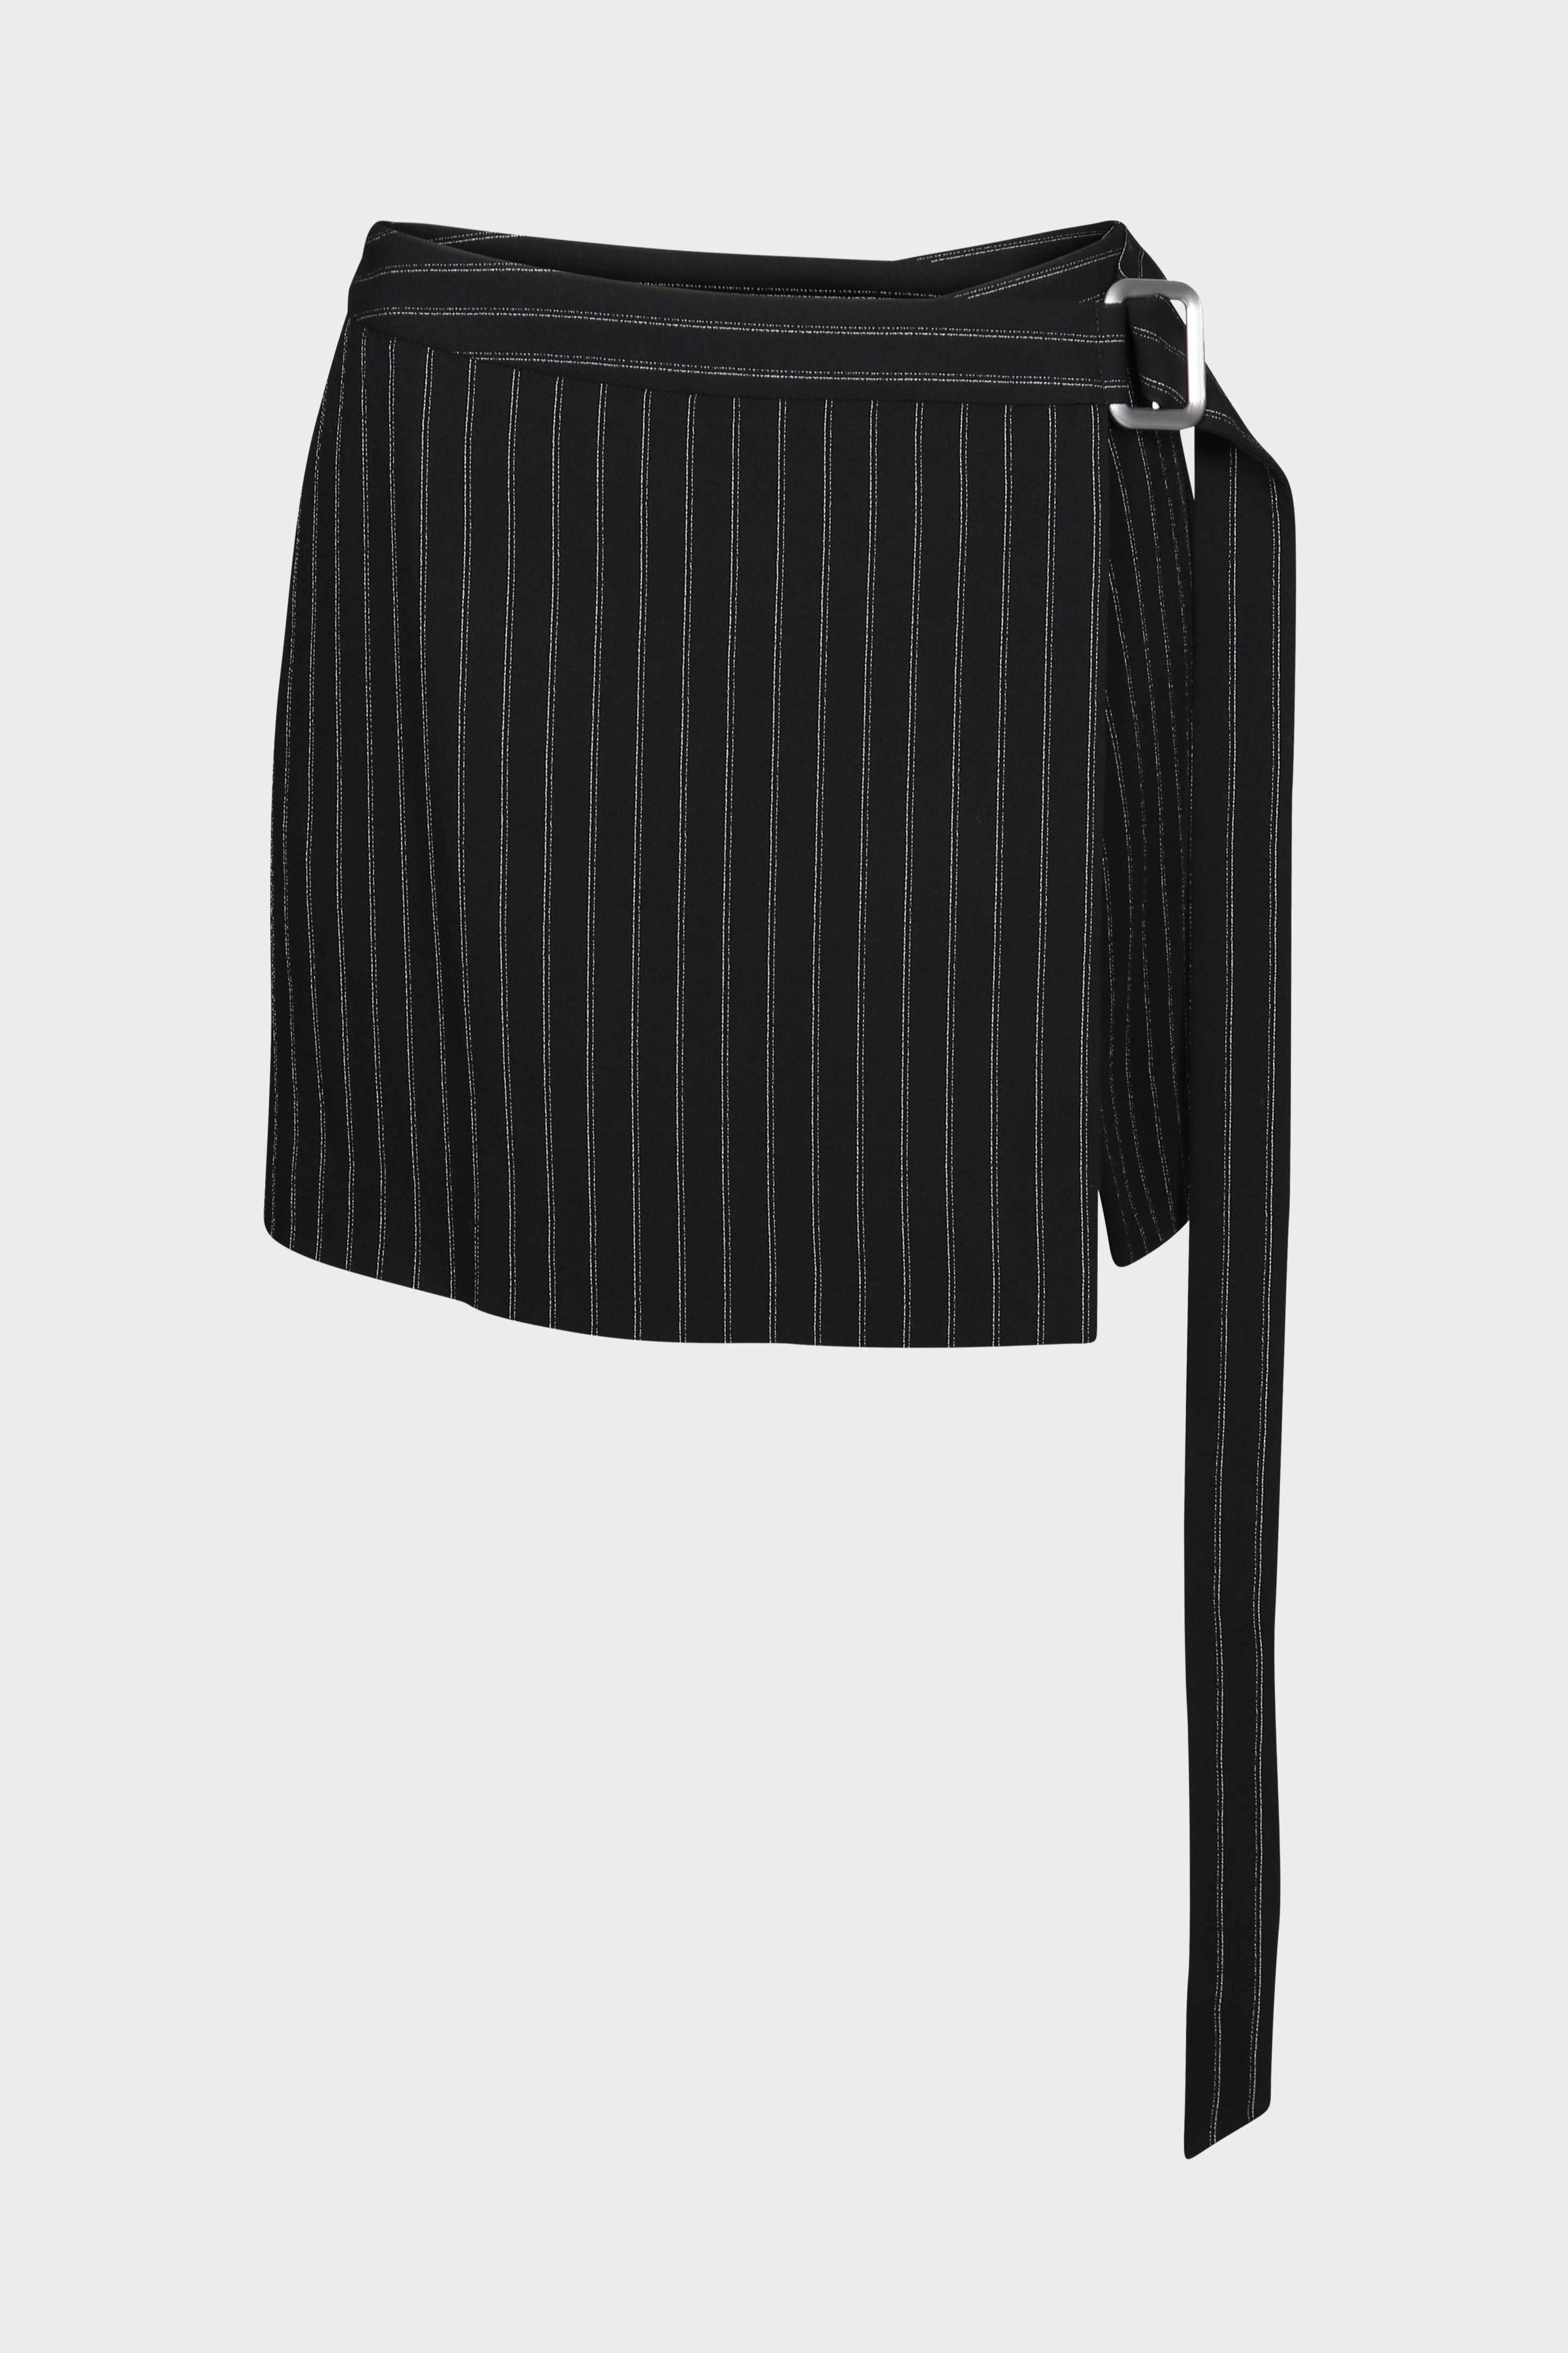 AMI PARIS Ray Mini Belted Skirt in Black/Chalk FR36 / DE34